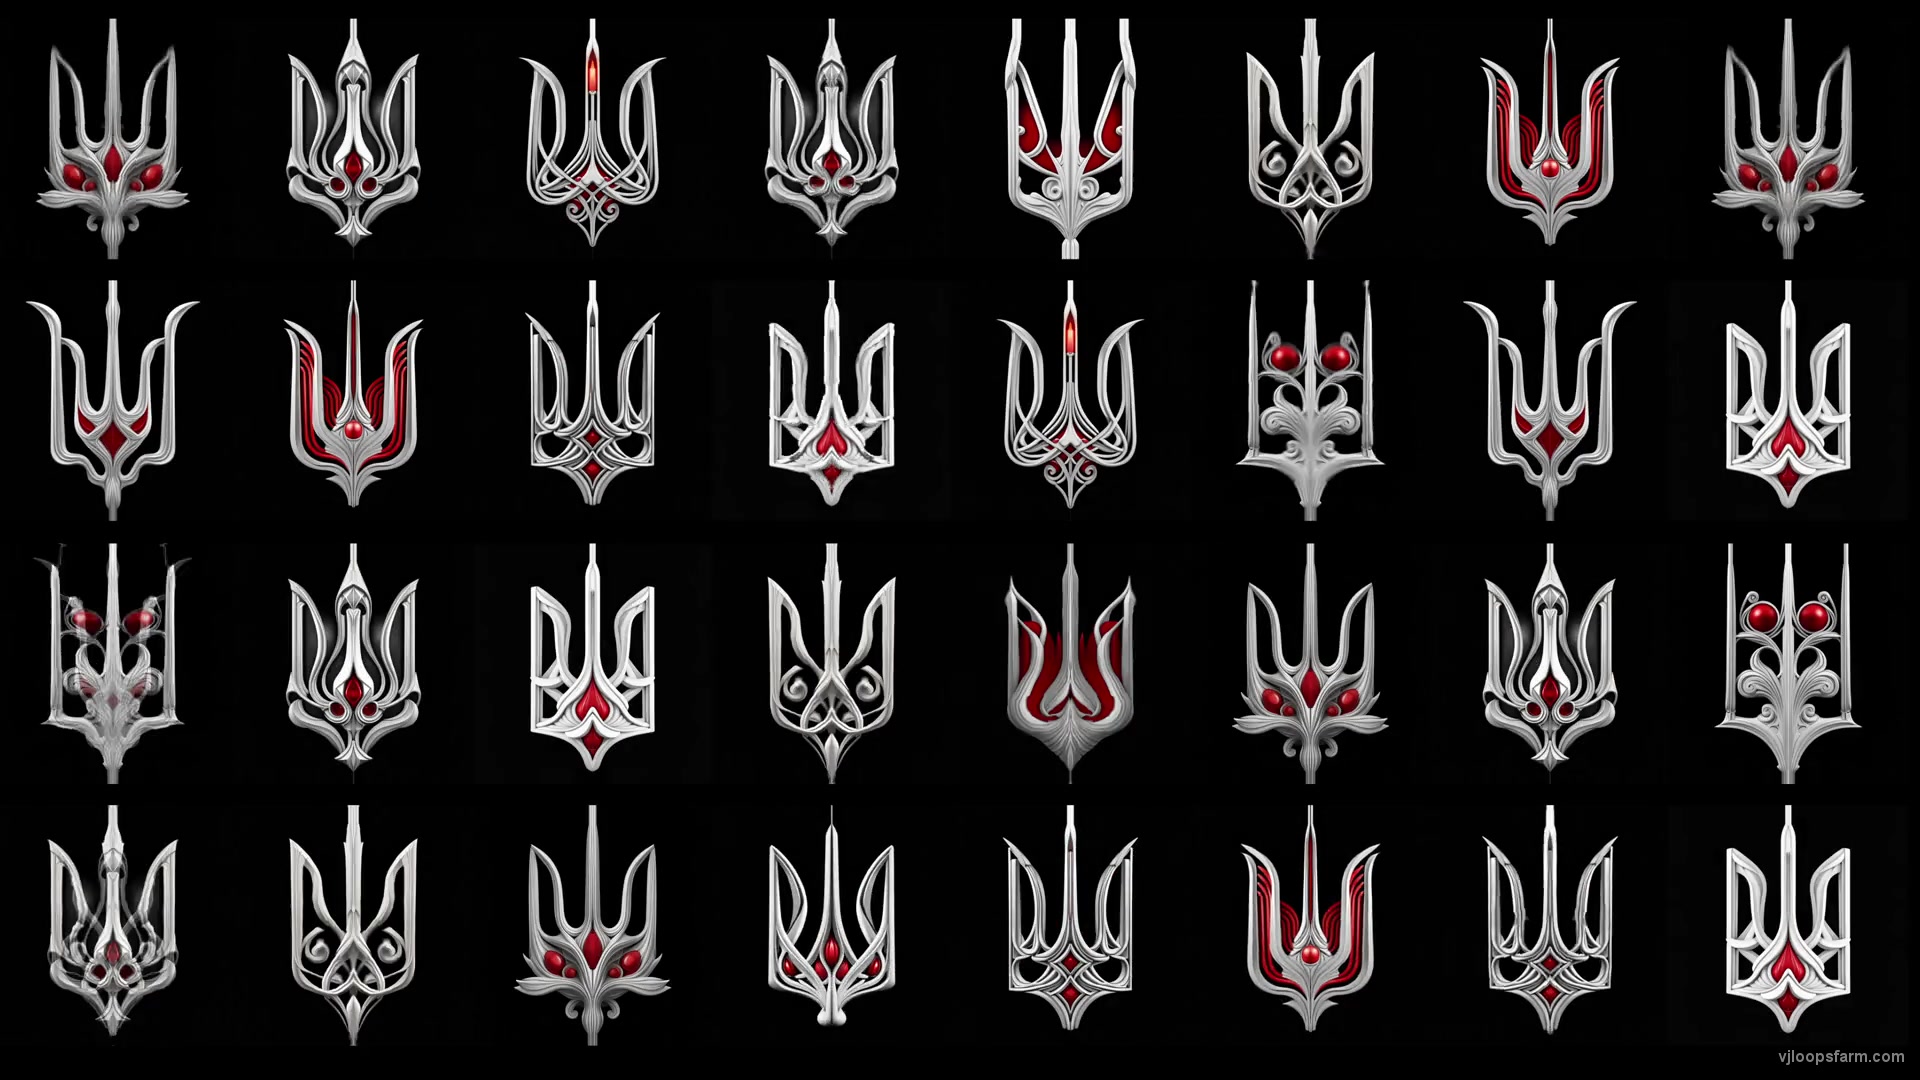 vj video background Trident-Ukraine-Sign-Red-White-Random-pattern-UltraHD-VJ-video-loop-oatlbf-1920_003